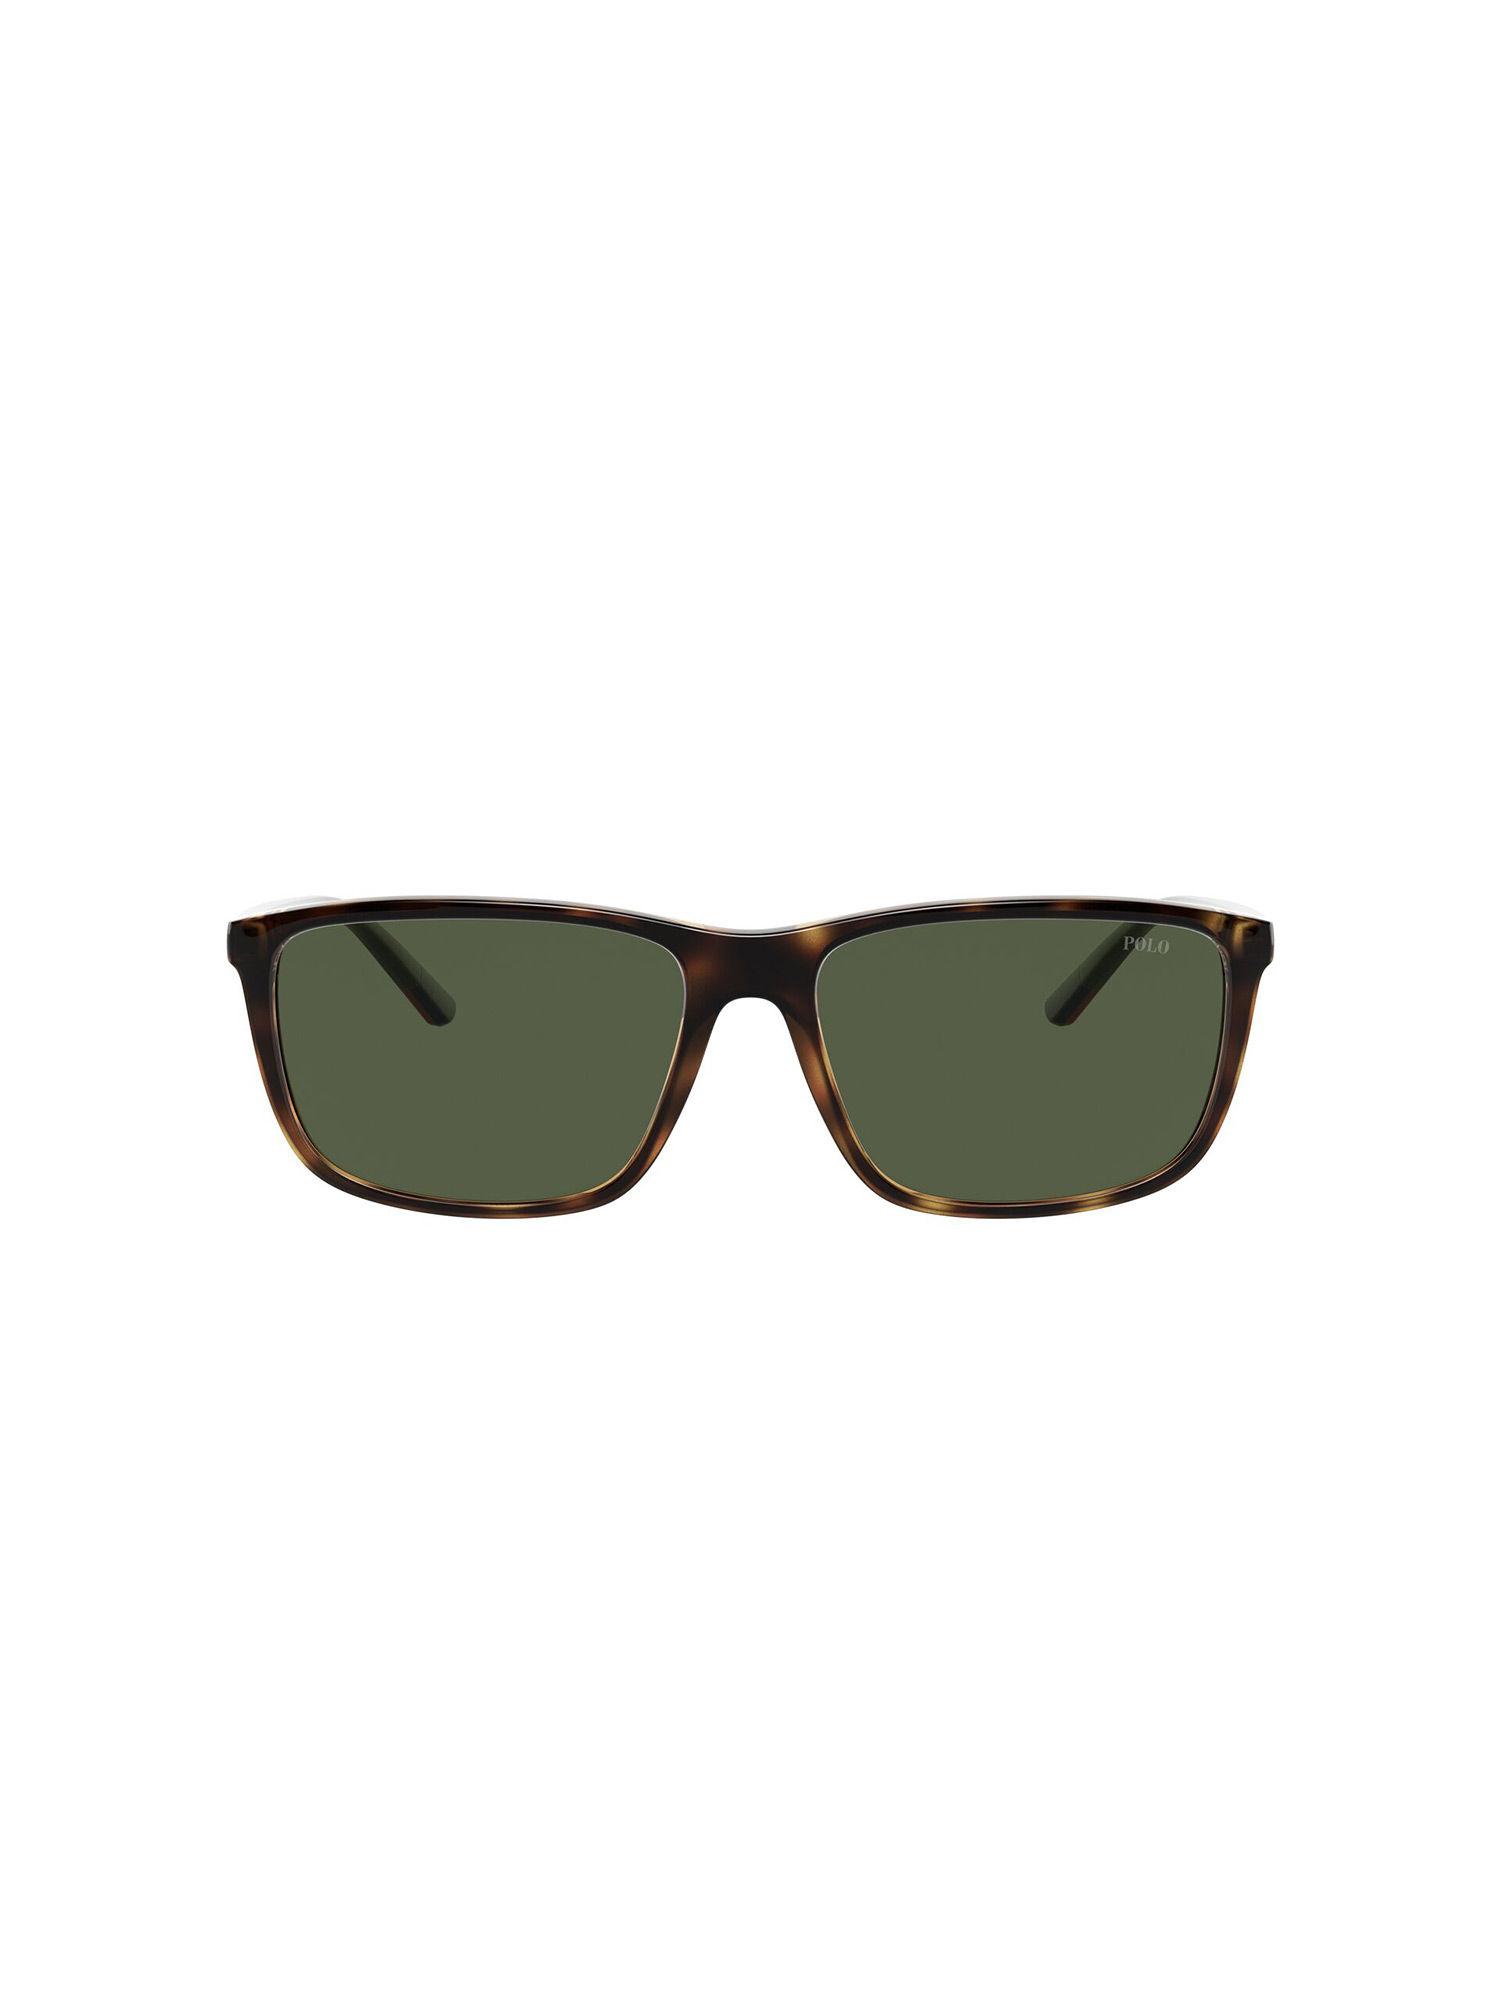 0ph4171-polo-bi-color-temple-tip-green-lens-rectangle-male-sunglasses